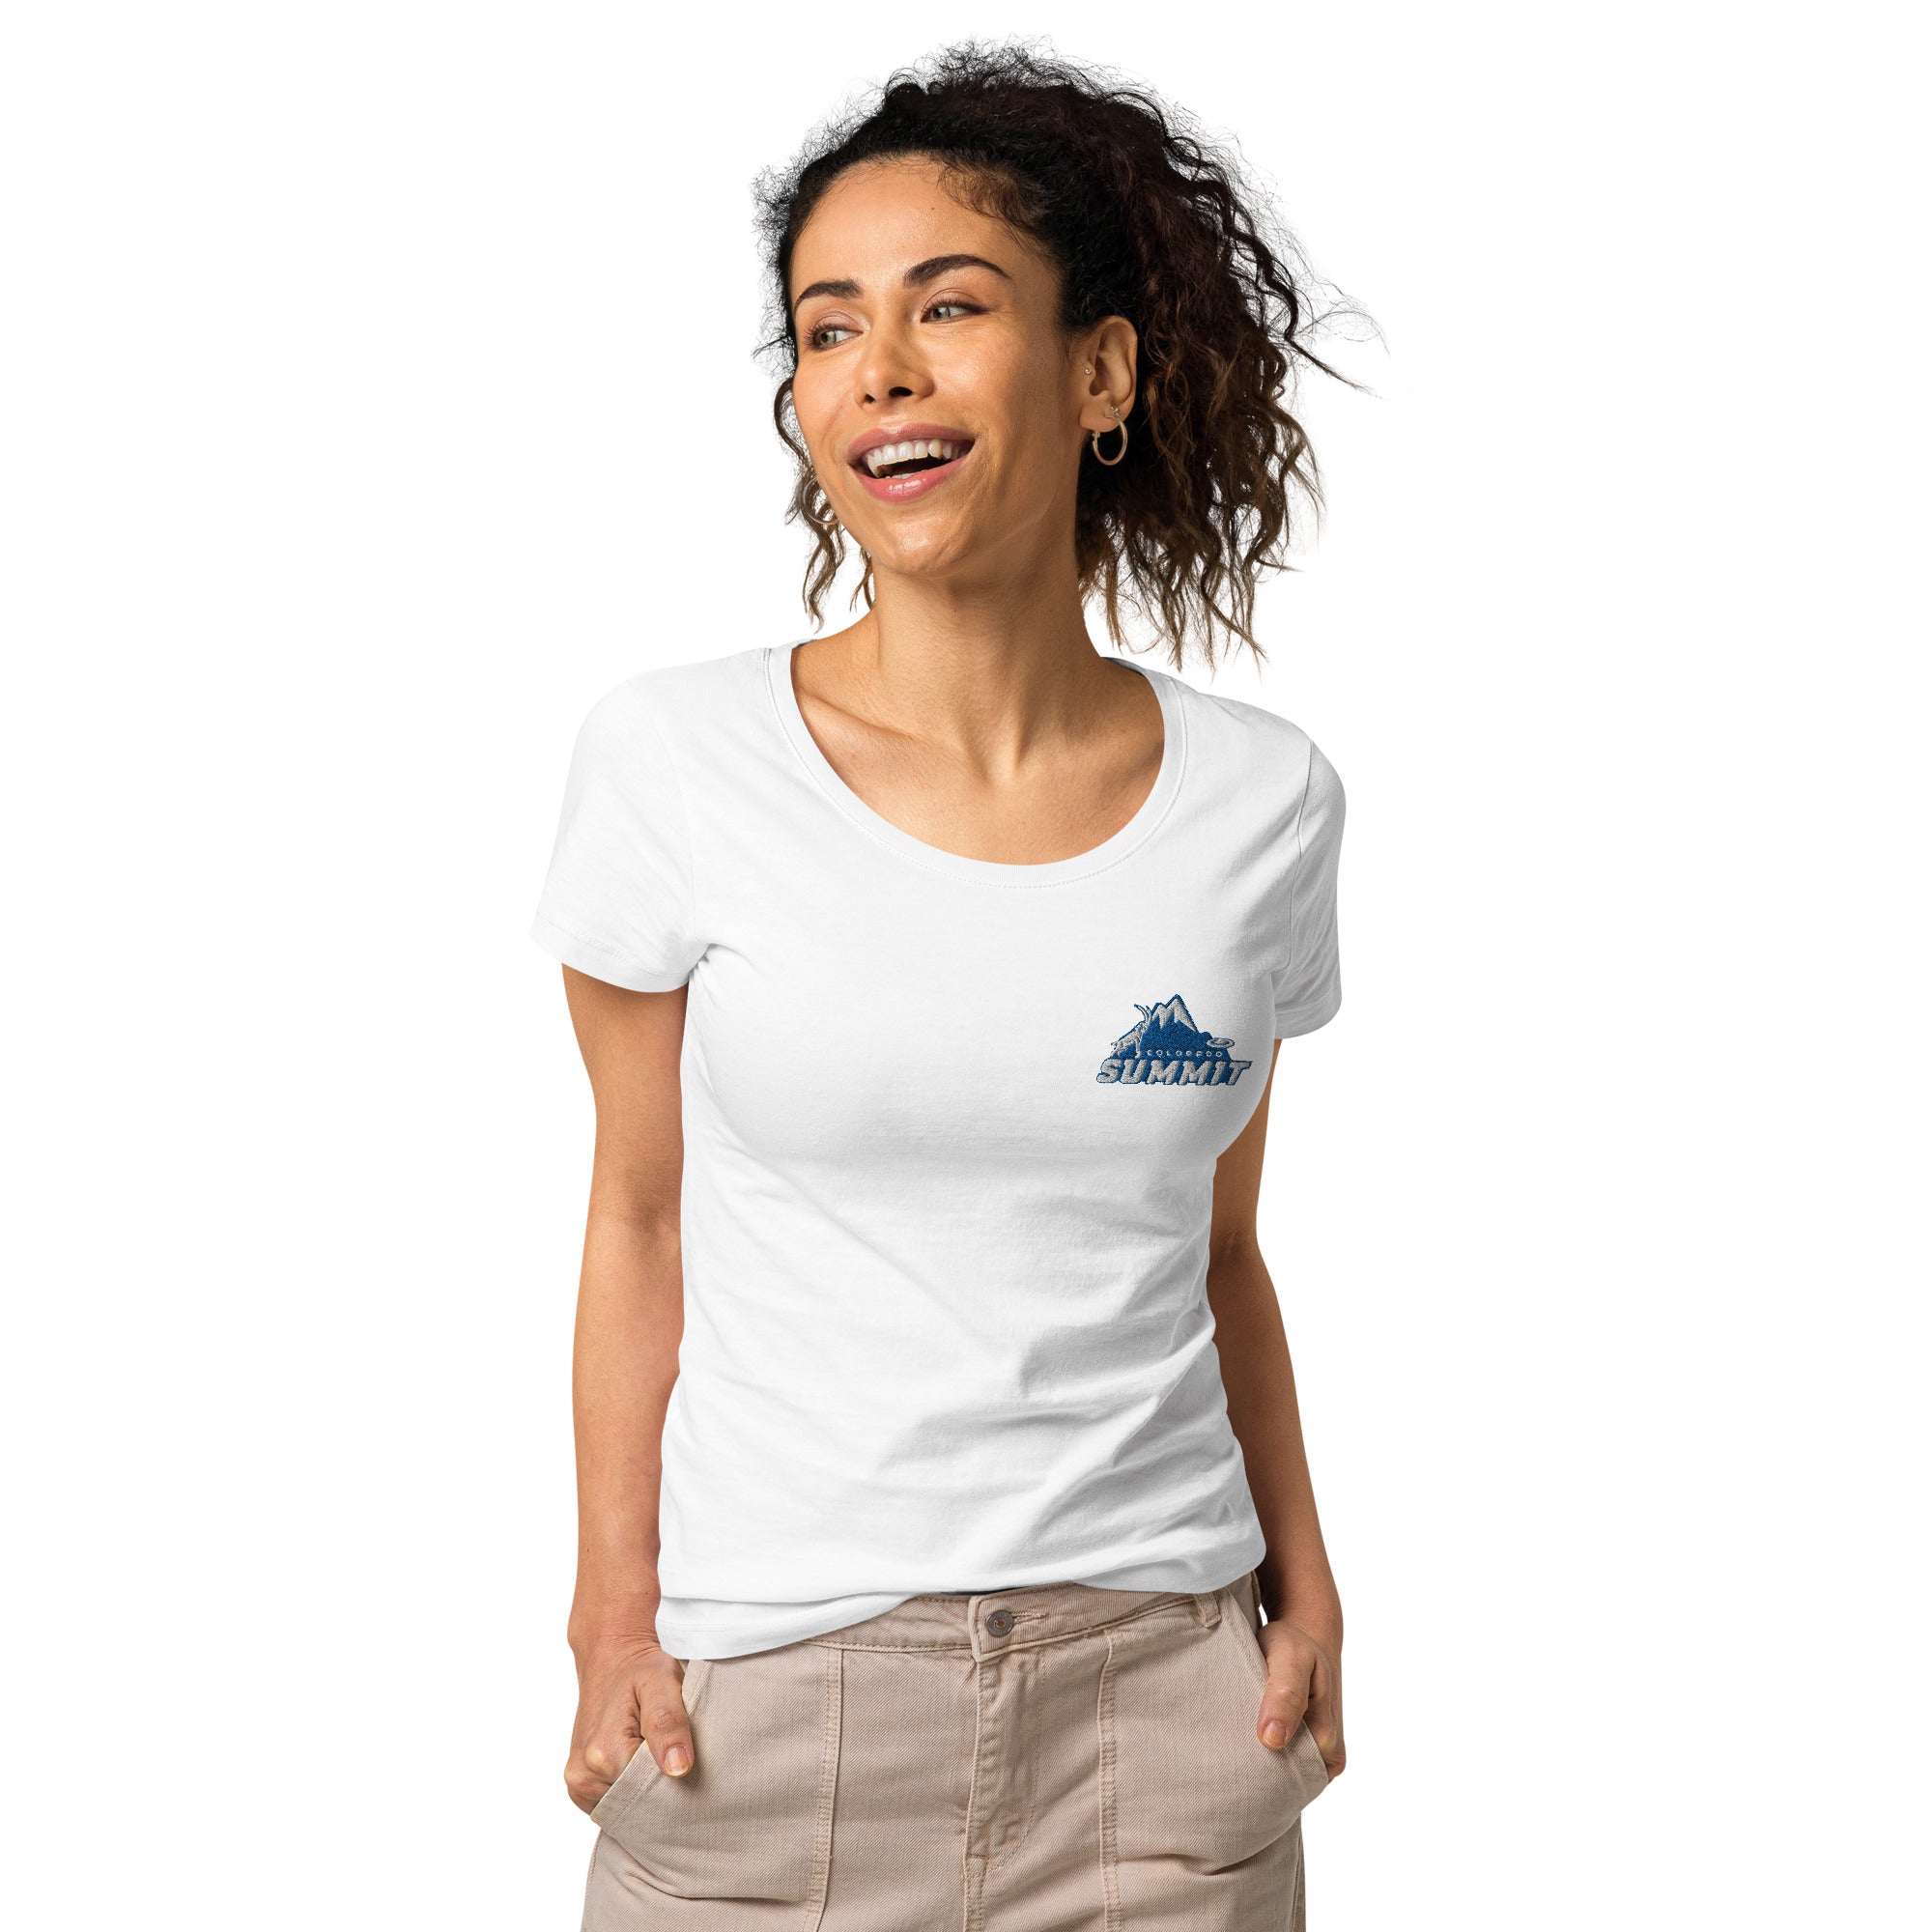 Women’s Colorado Summit organic t-shirt